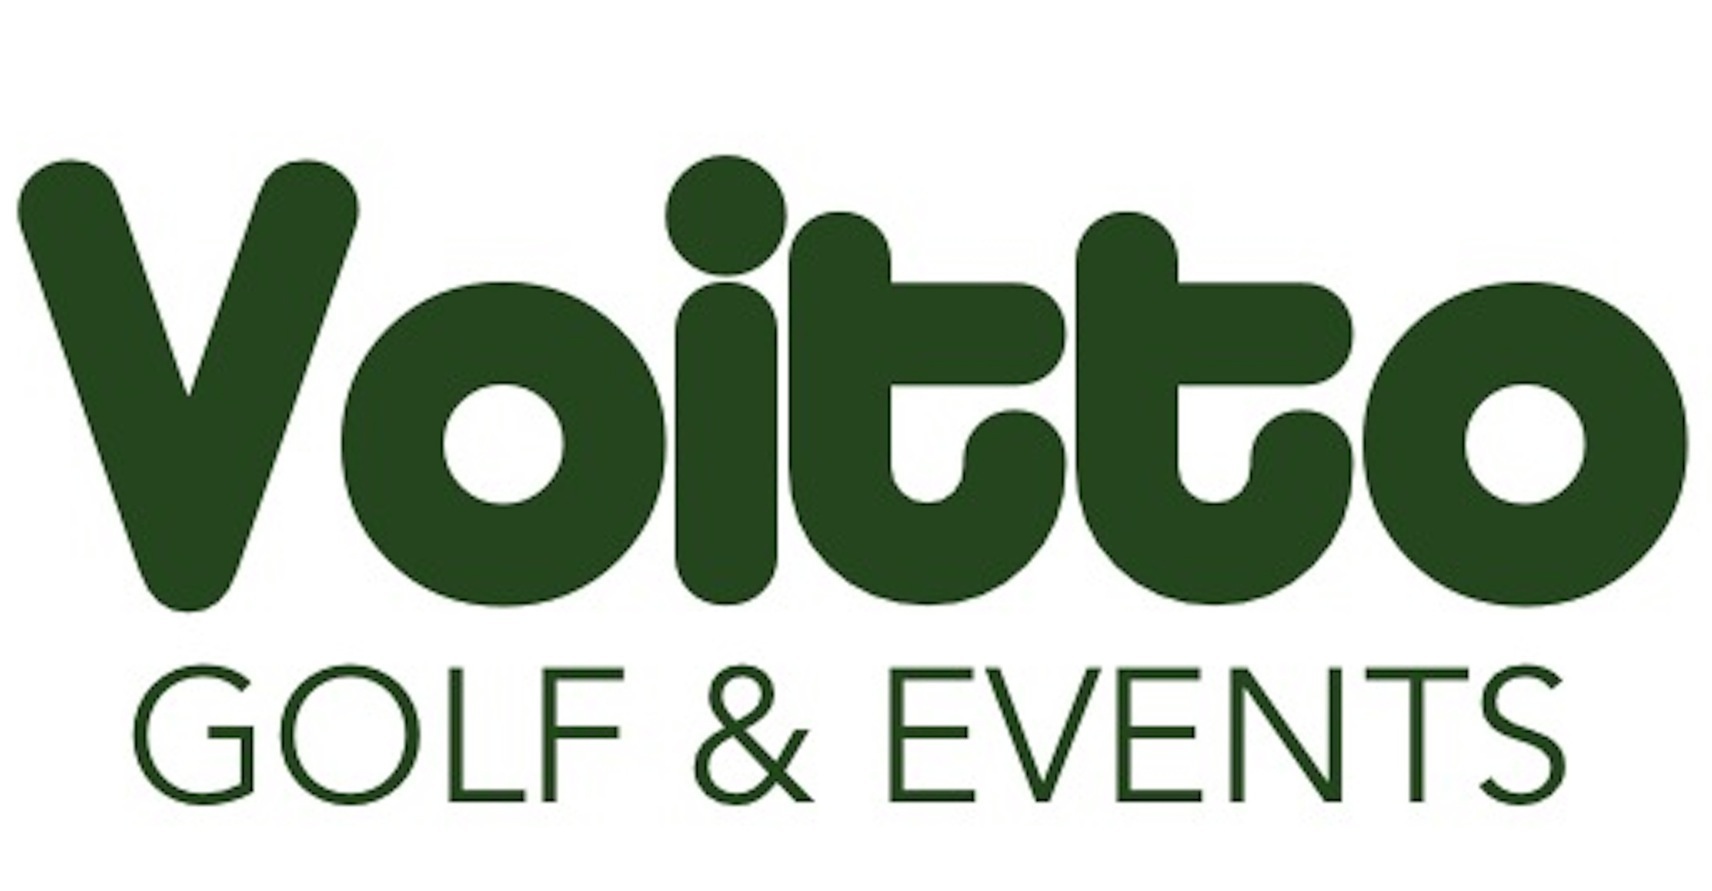 Voitto Golf & Events